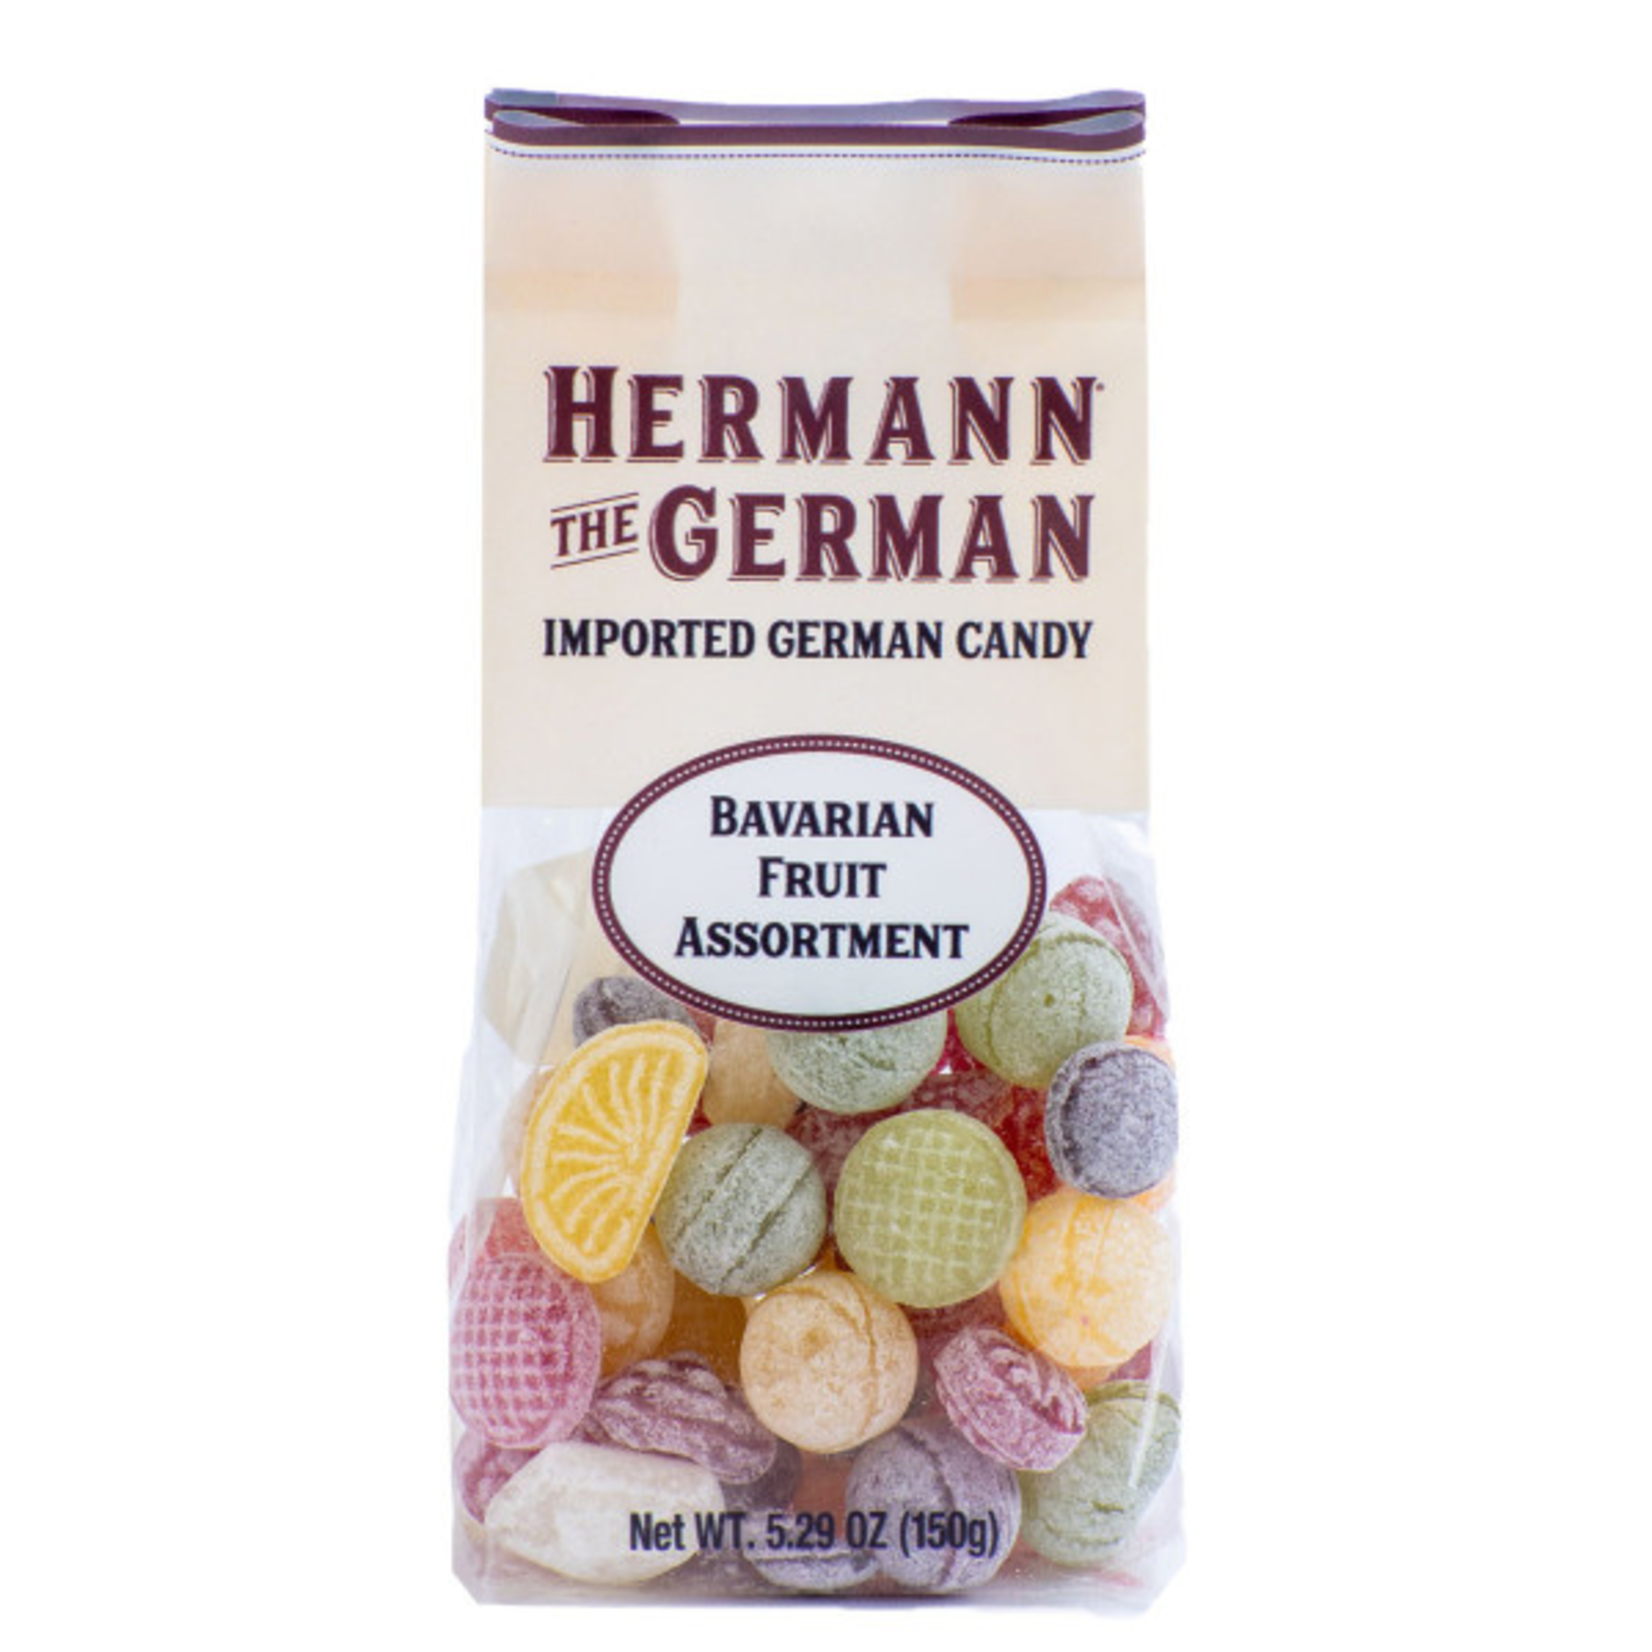 Hermann the German Hermann the German Bavarian Fruit Assortment Candy